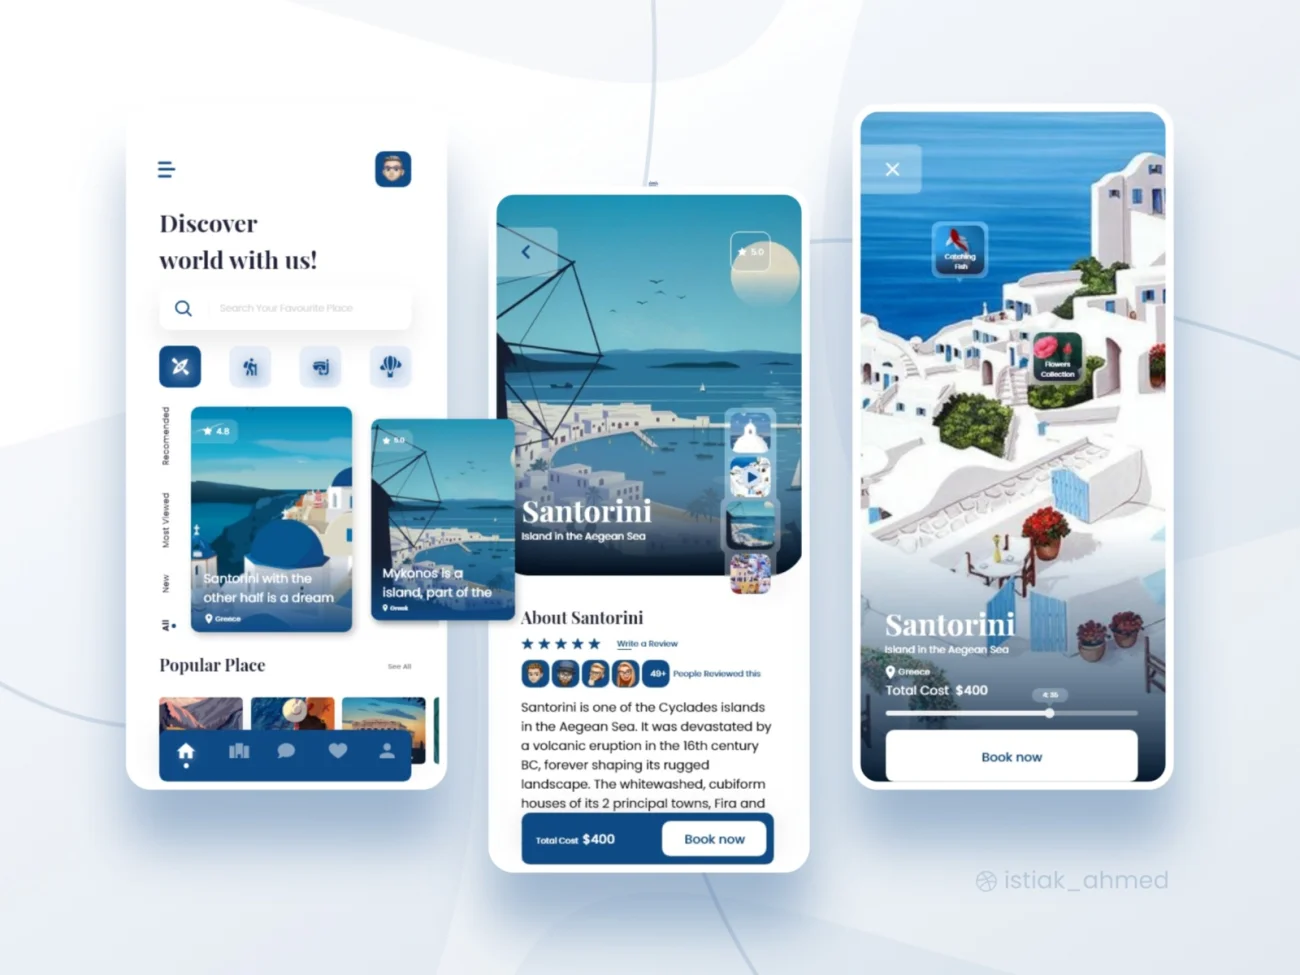 旅游门票酒店预订手机应用UI设计模板 travel and hotel service mobile app插图1